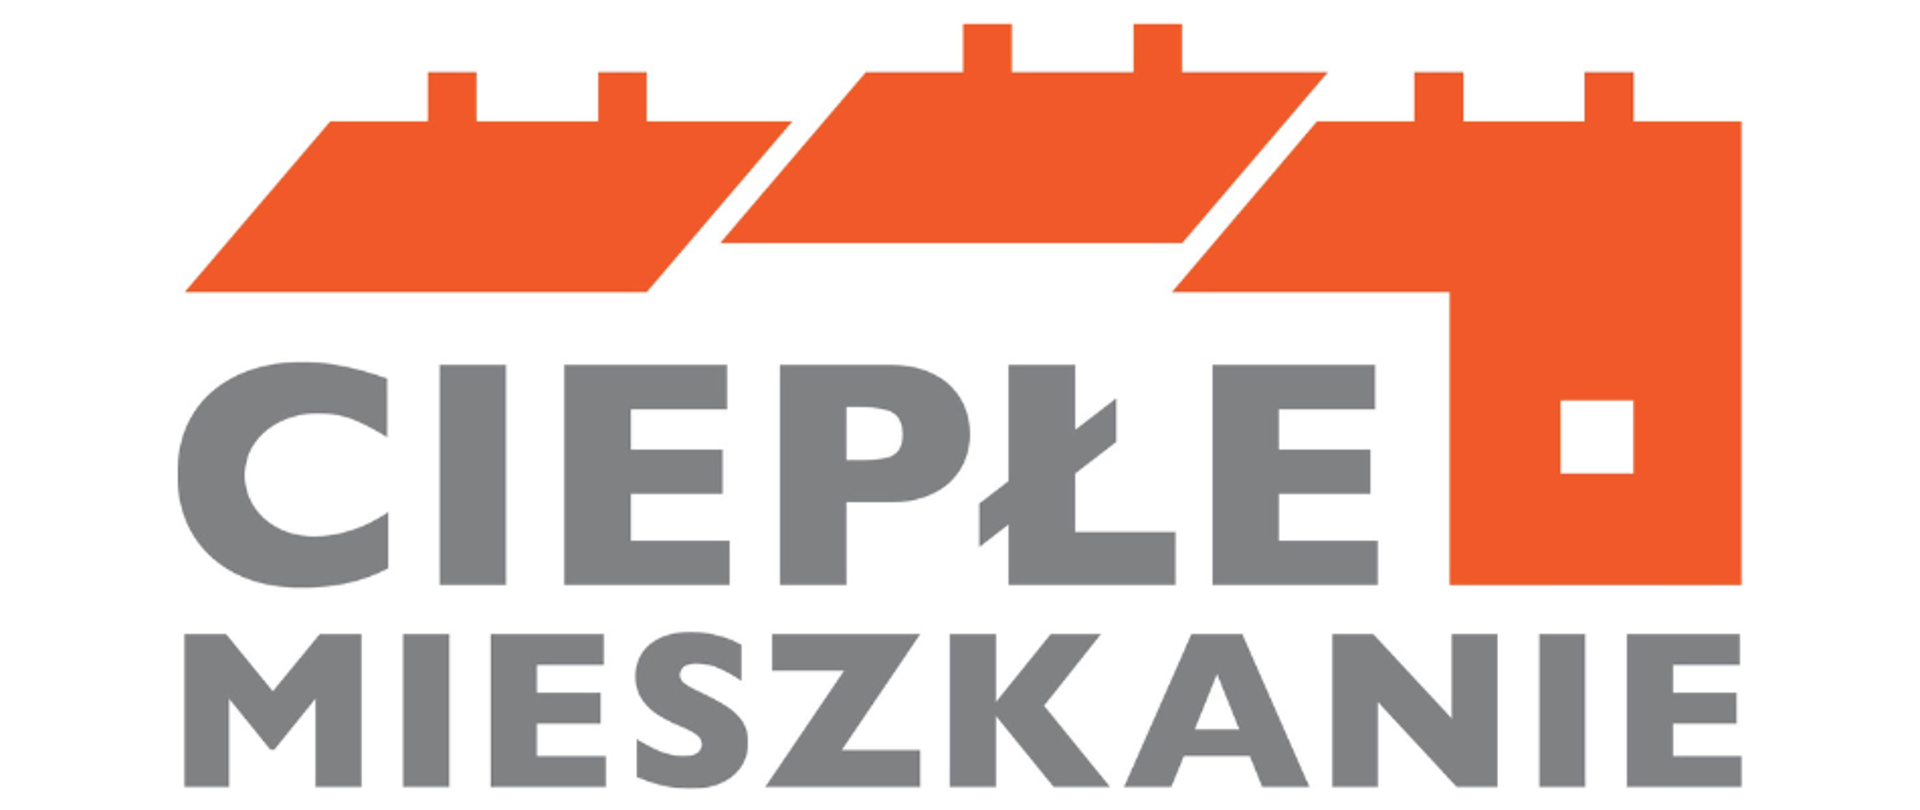 Logo programu "Ciepłe mieszkanie"